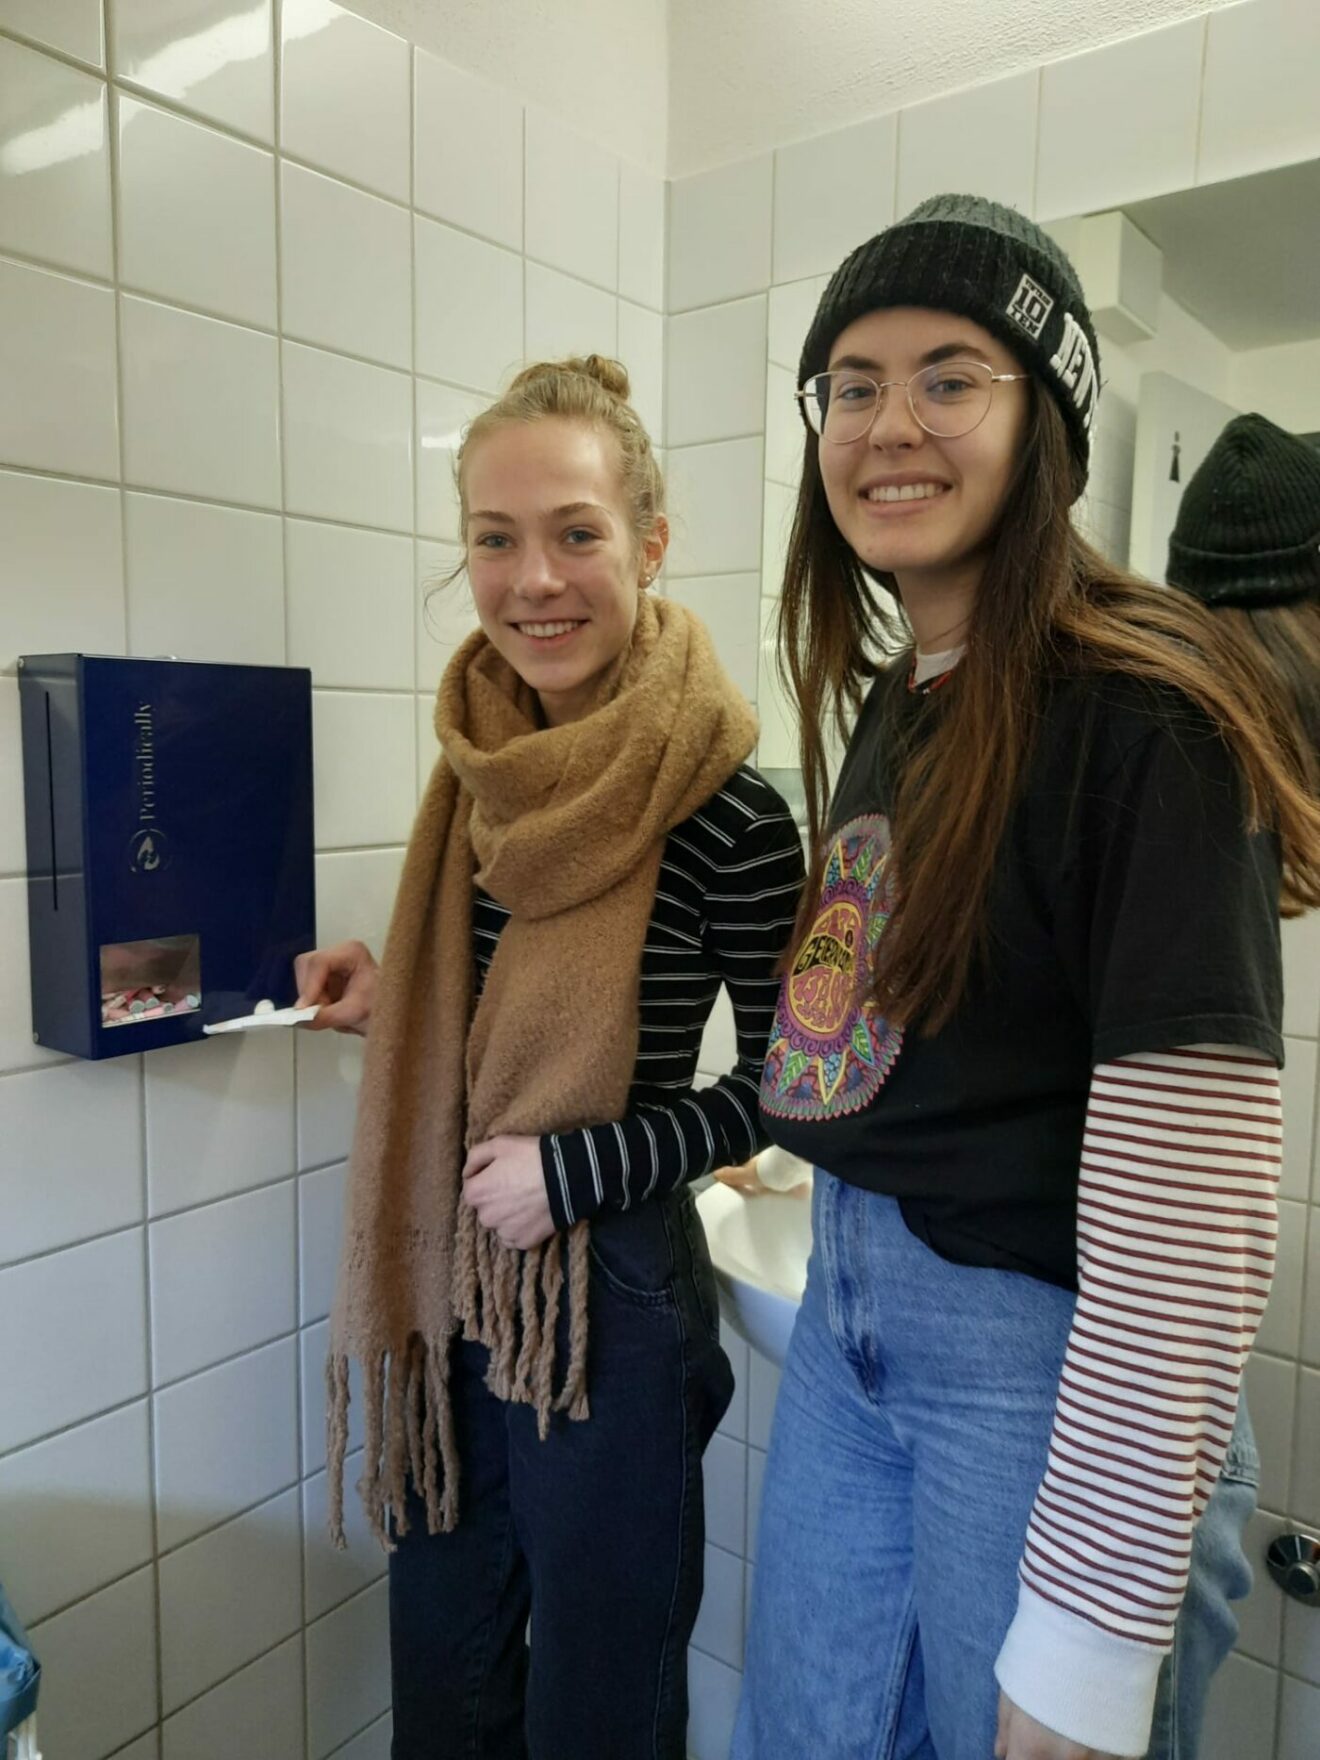 Kostenlose Menstruationsartikel in Herrenberg - erfolgreicher Antrag der Jugenddelegation